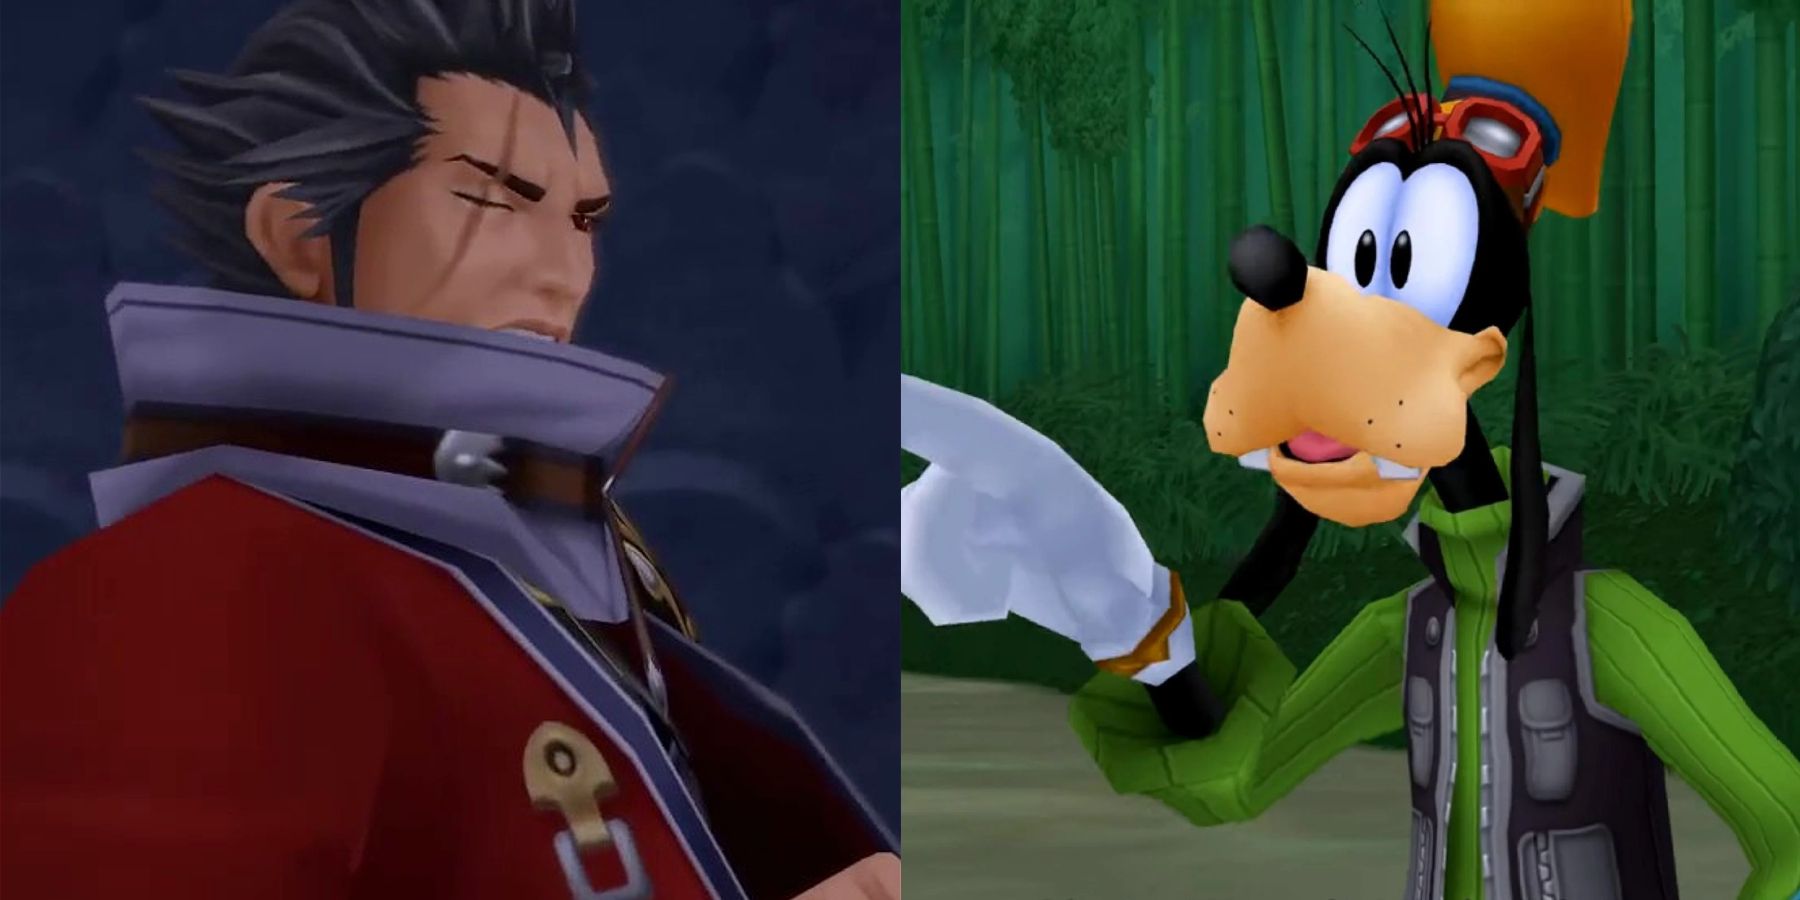 Auron FFX and Goofy Disney Kingdom Hearts Companions